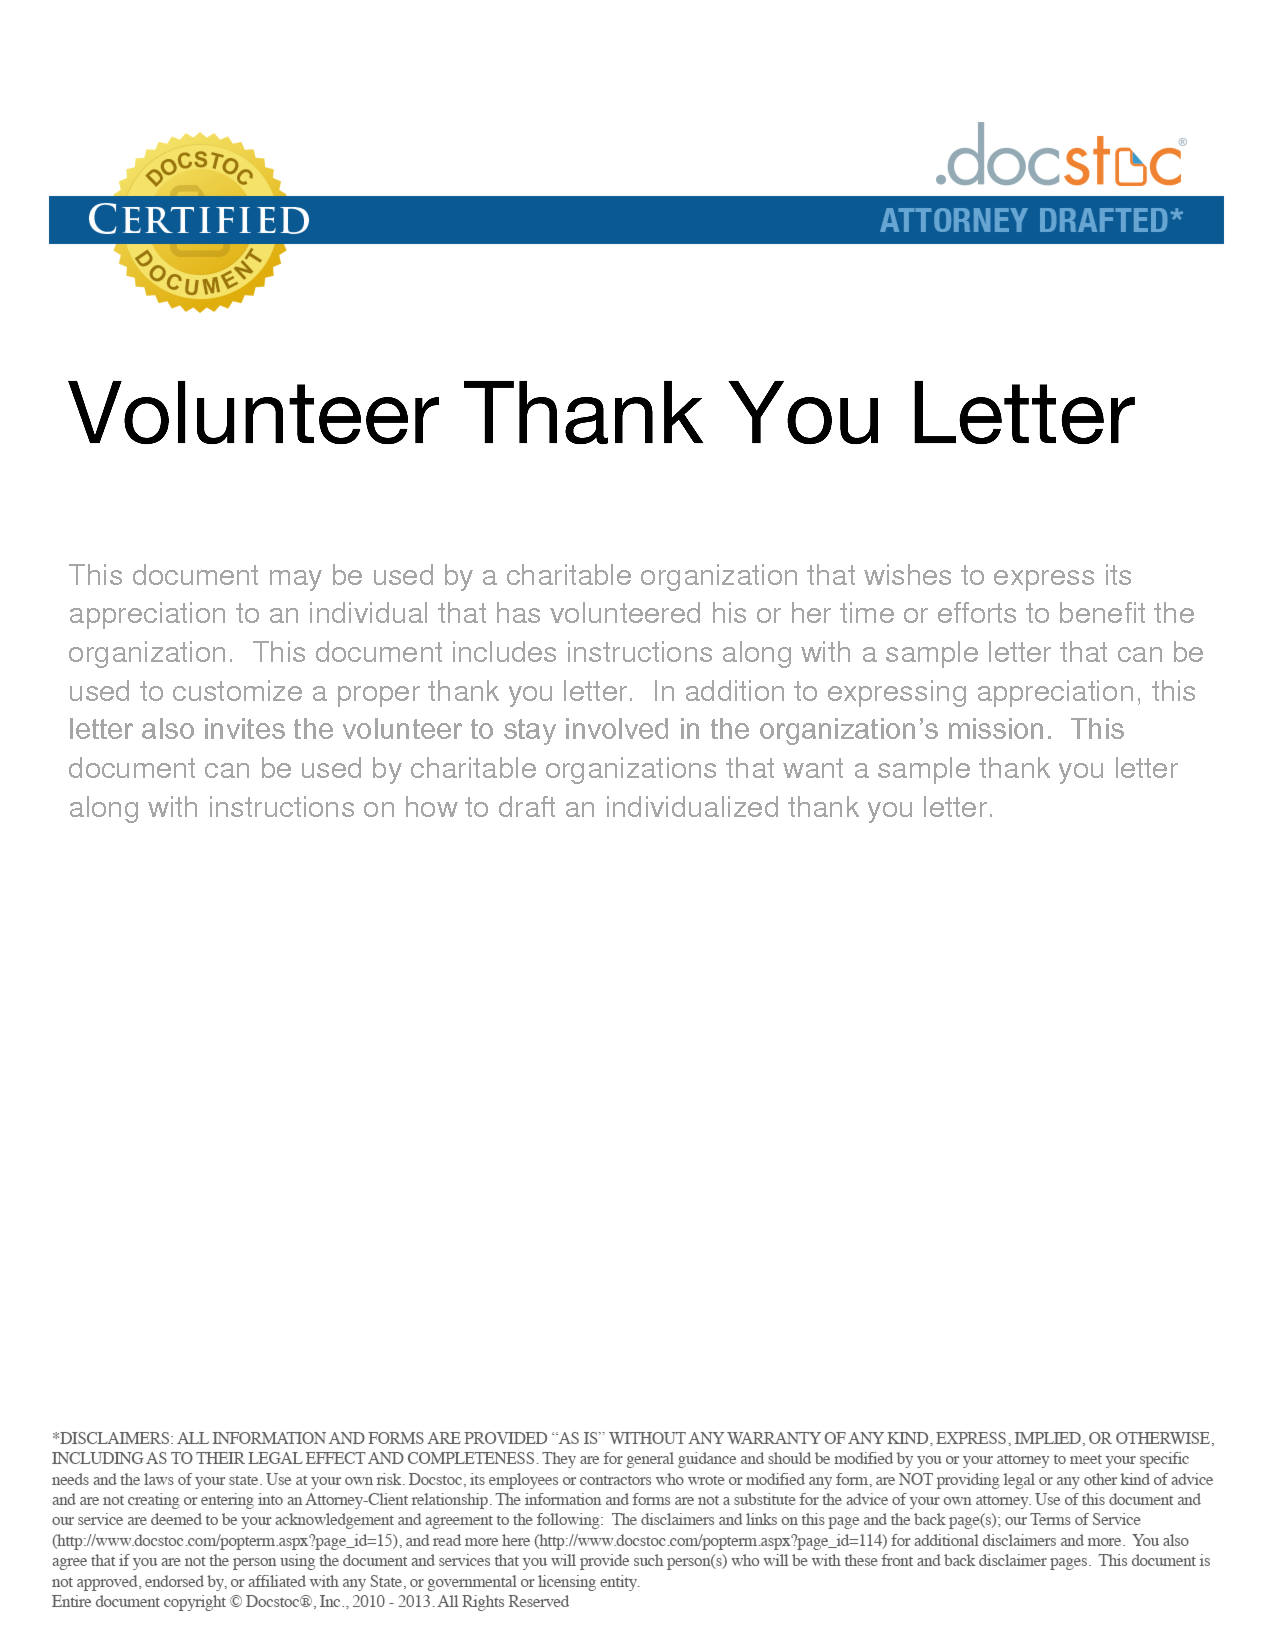 template-for-volunteer-letter